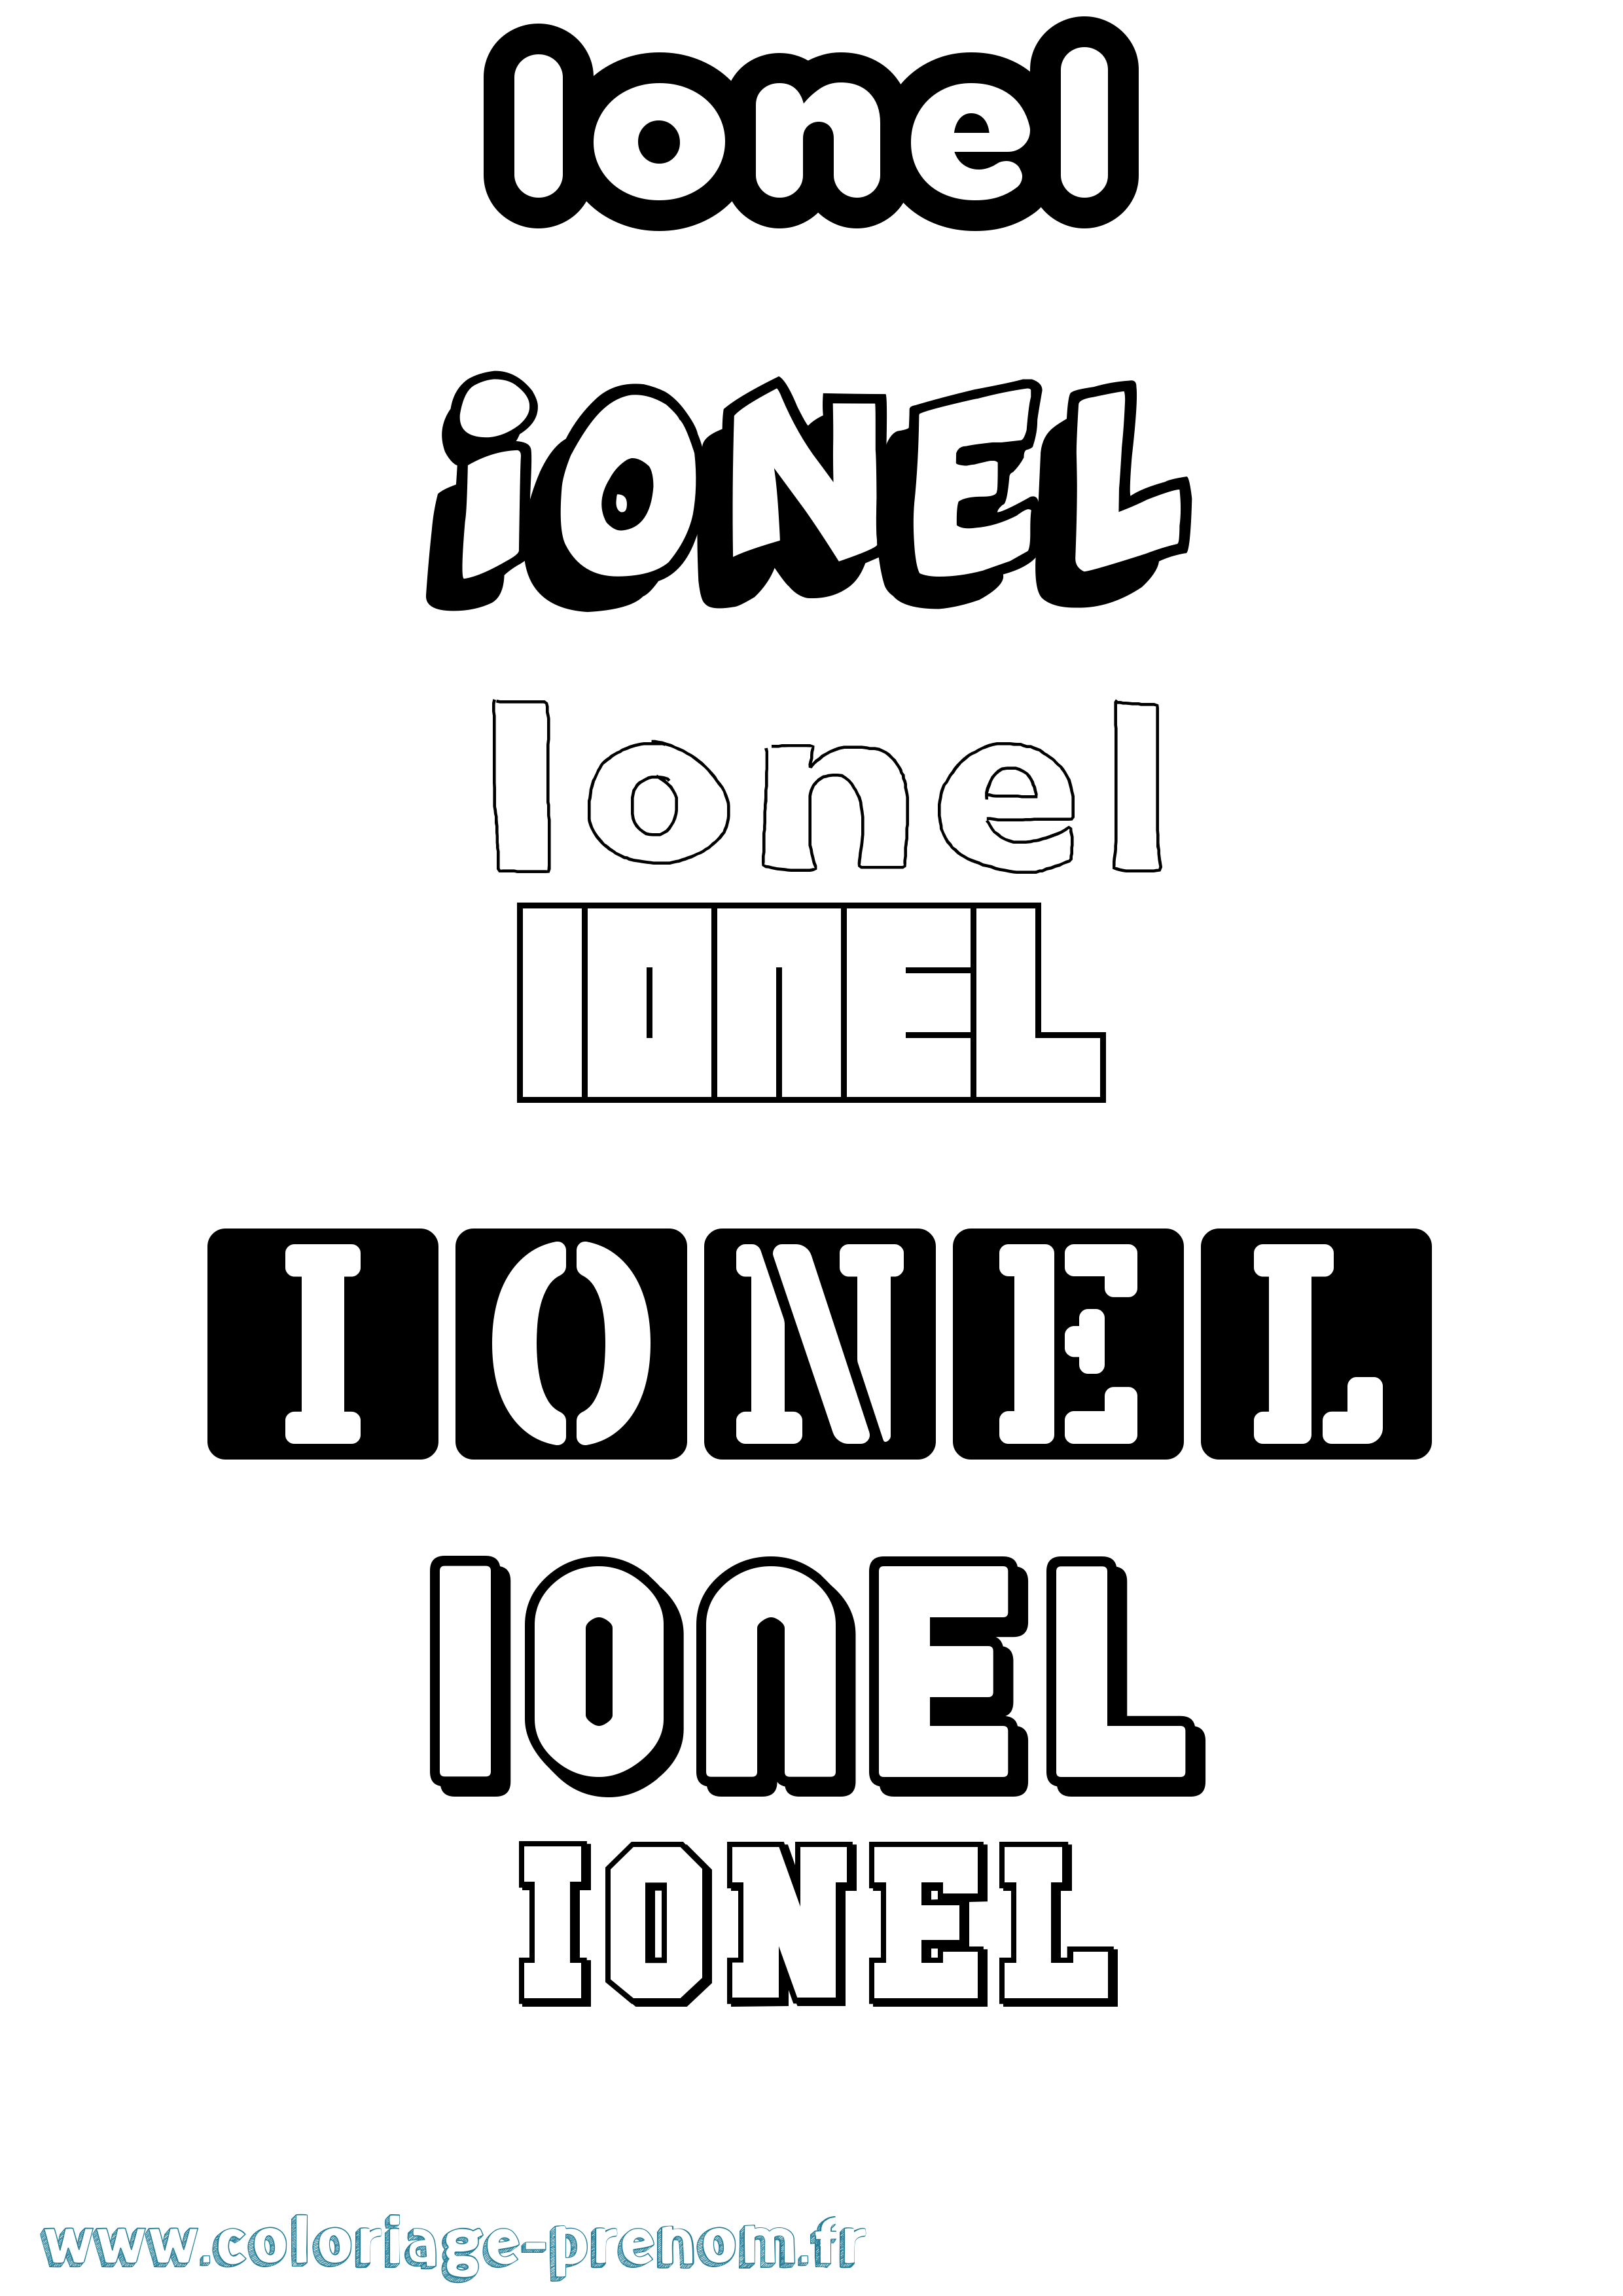 Coloriage prénom Ionel Simple